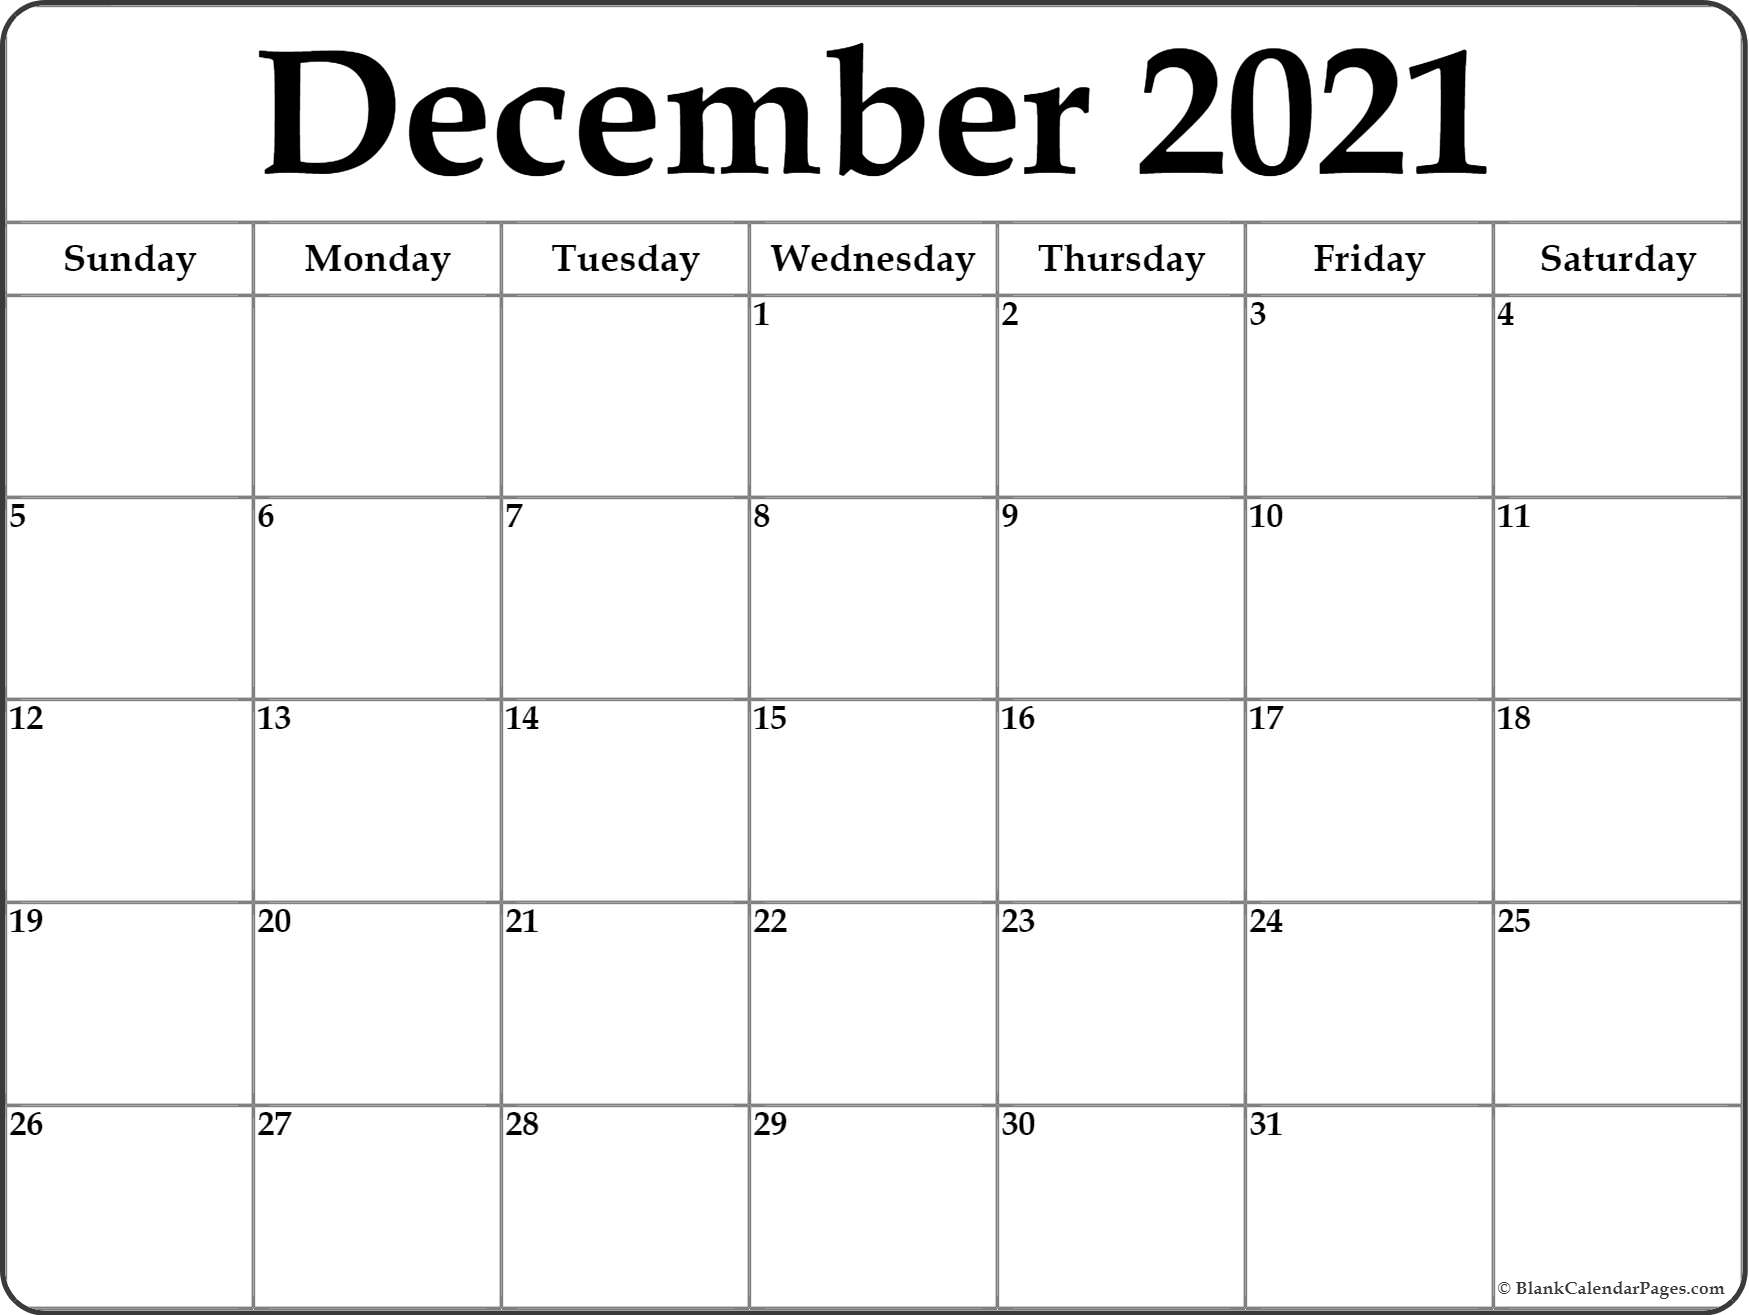 December 2021 Blank Calendar Templates.